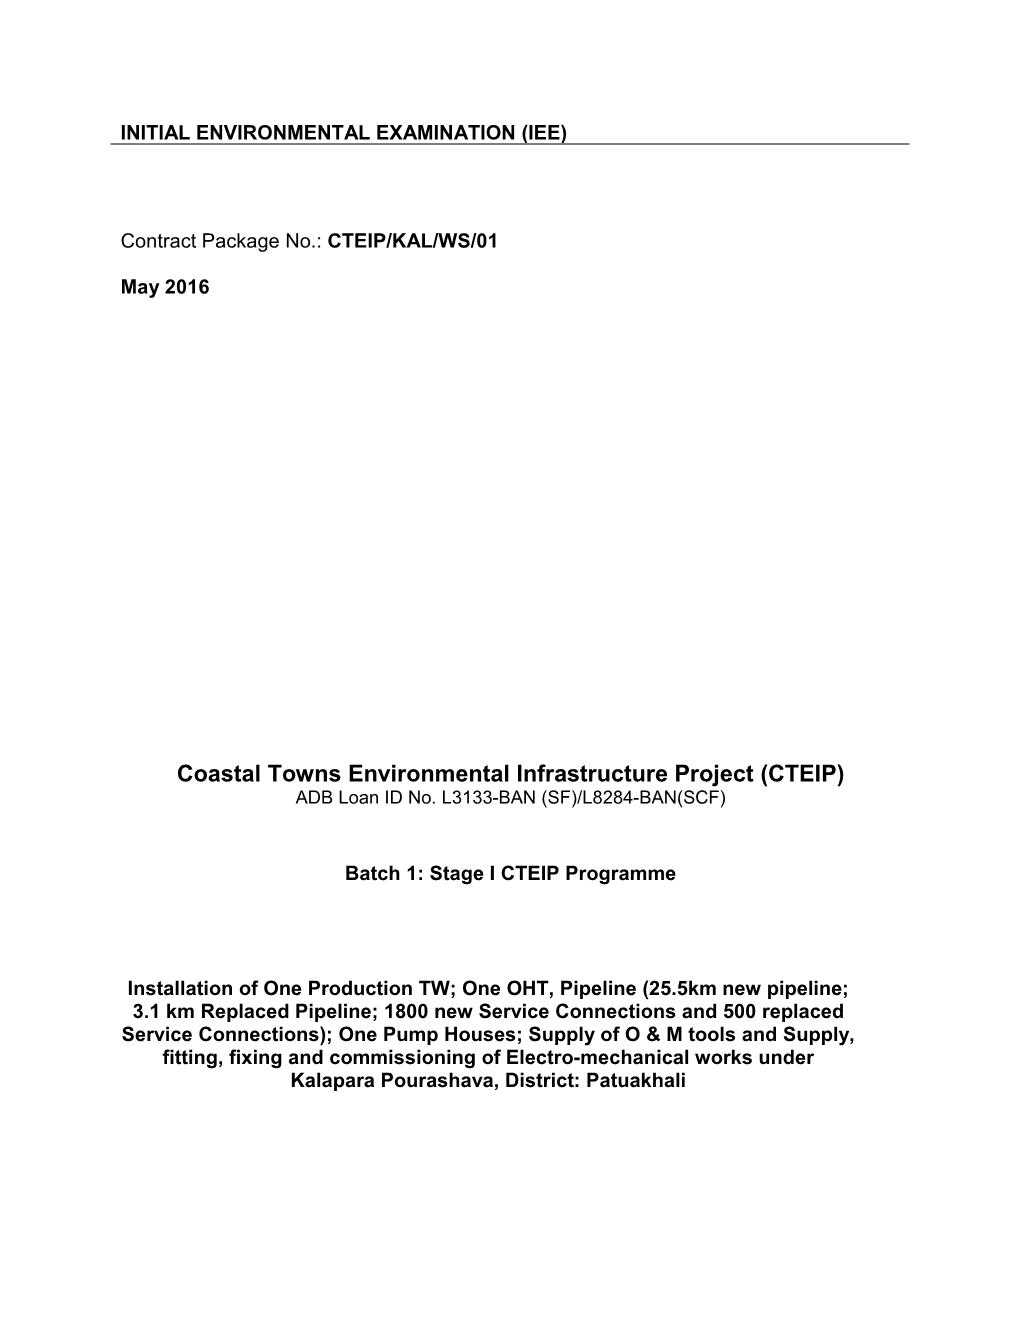 Coastal Towns Environmental Infrastructure Project (CTEIP) ADB Loan ID No